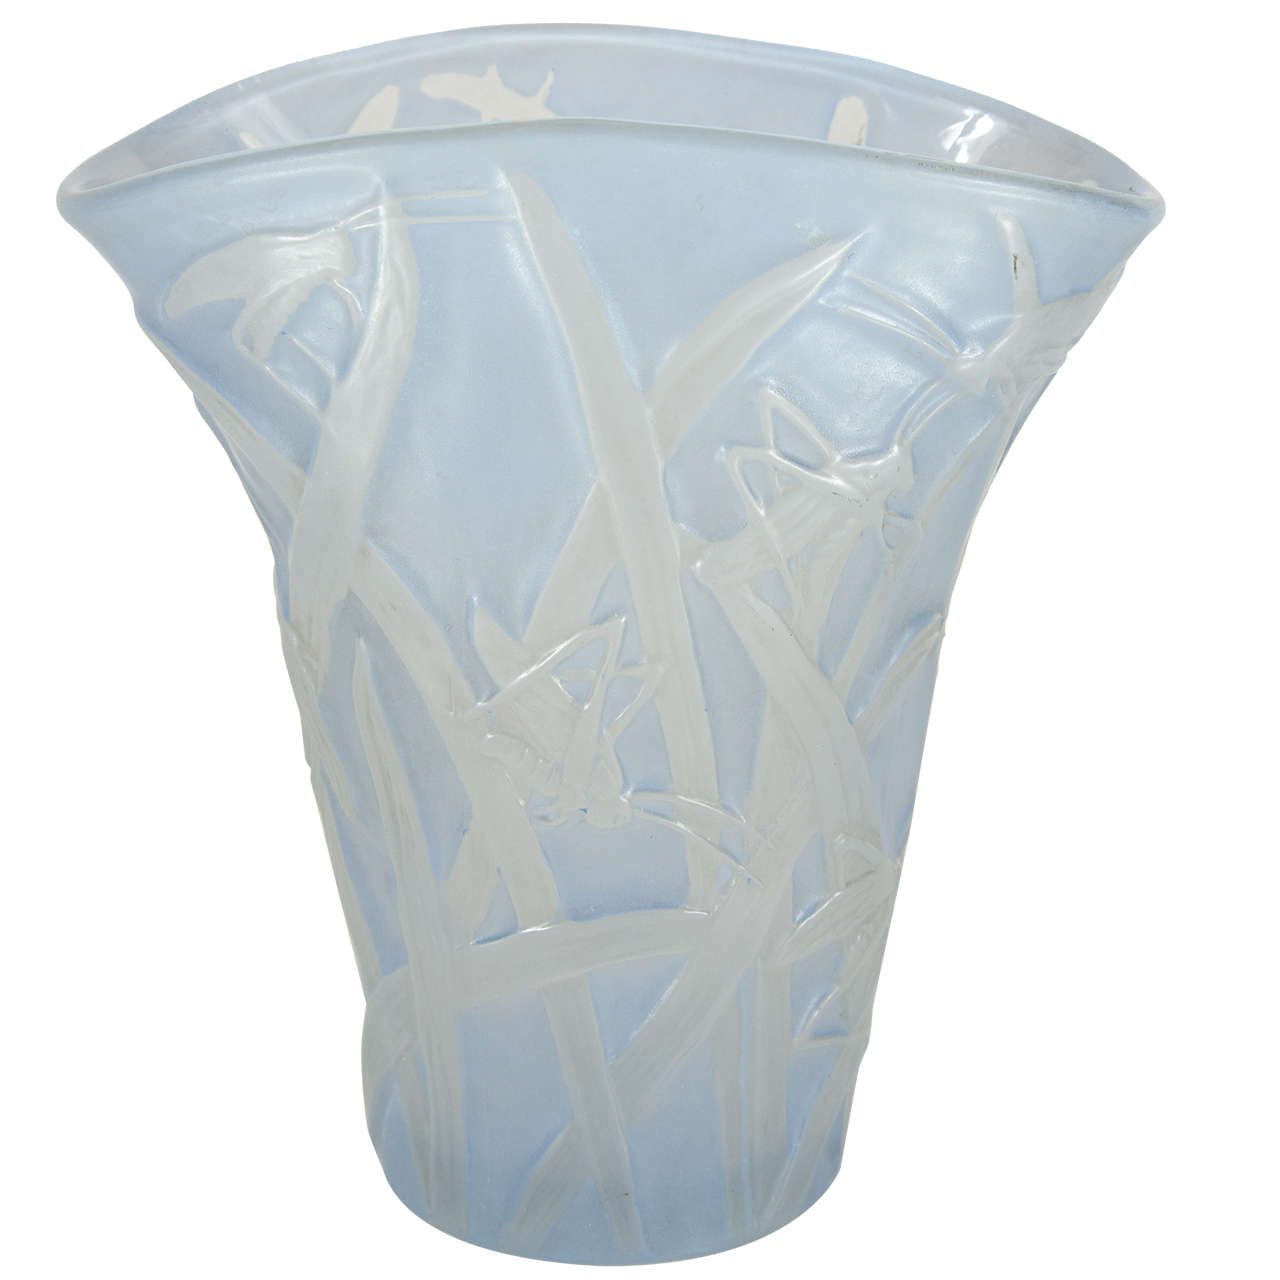 Art Deco Pale Blue Grasshopper Vase by the Phoenix Glass Company